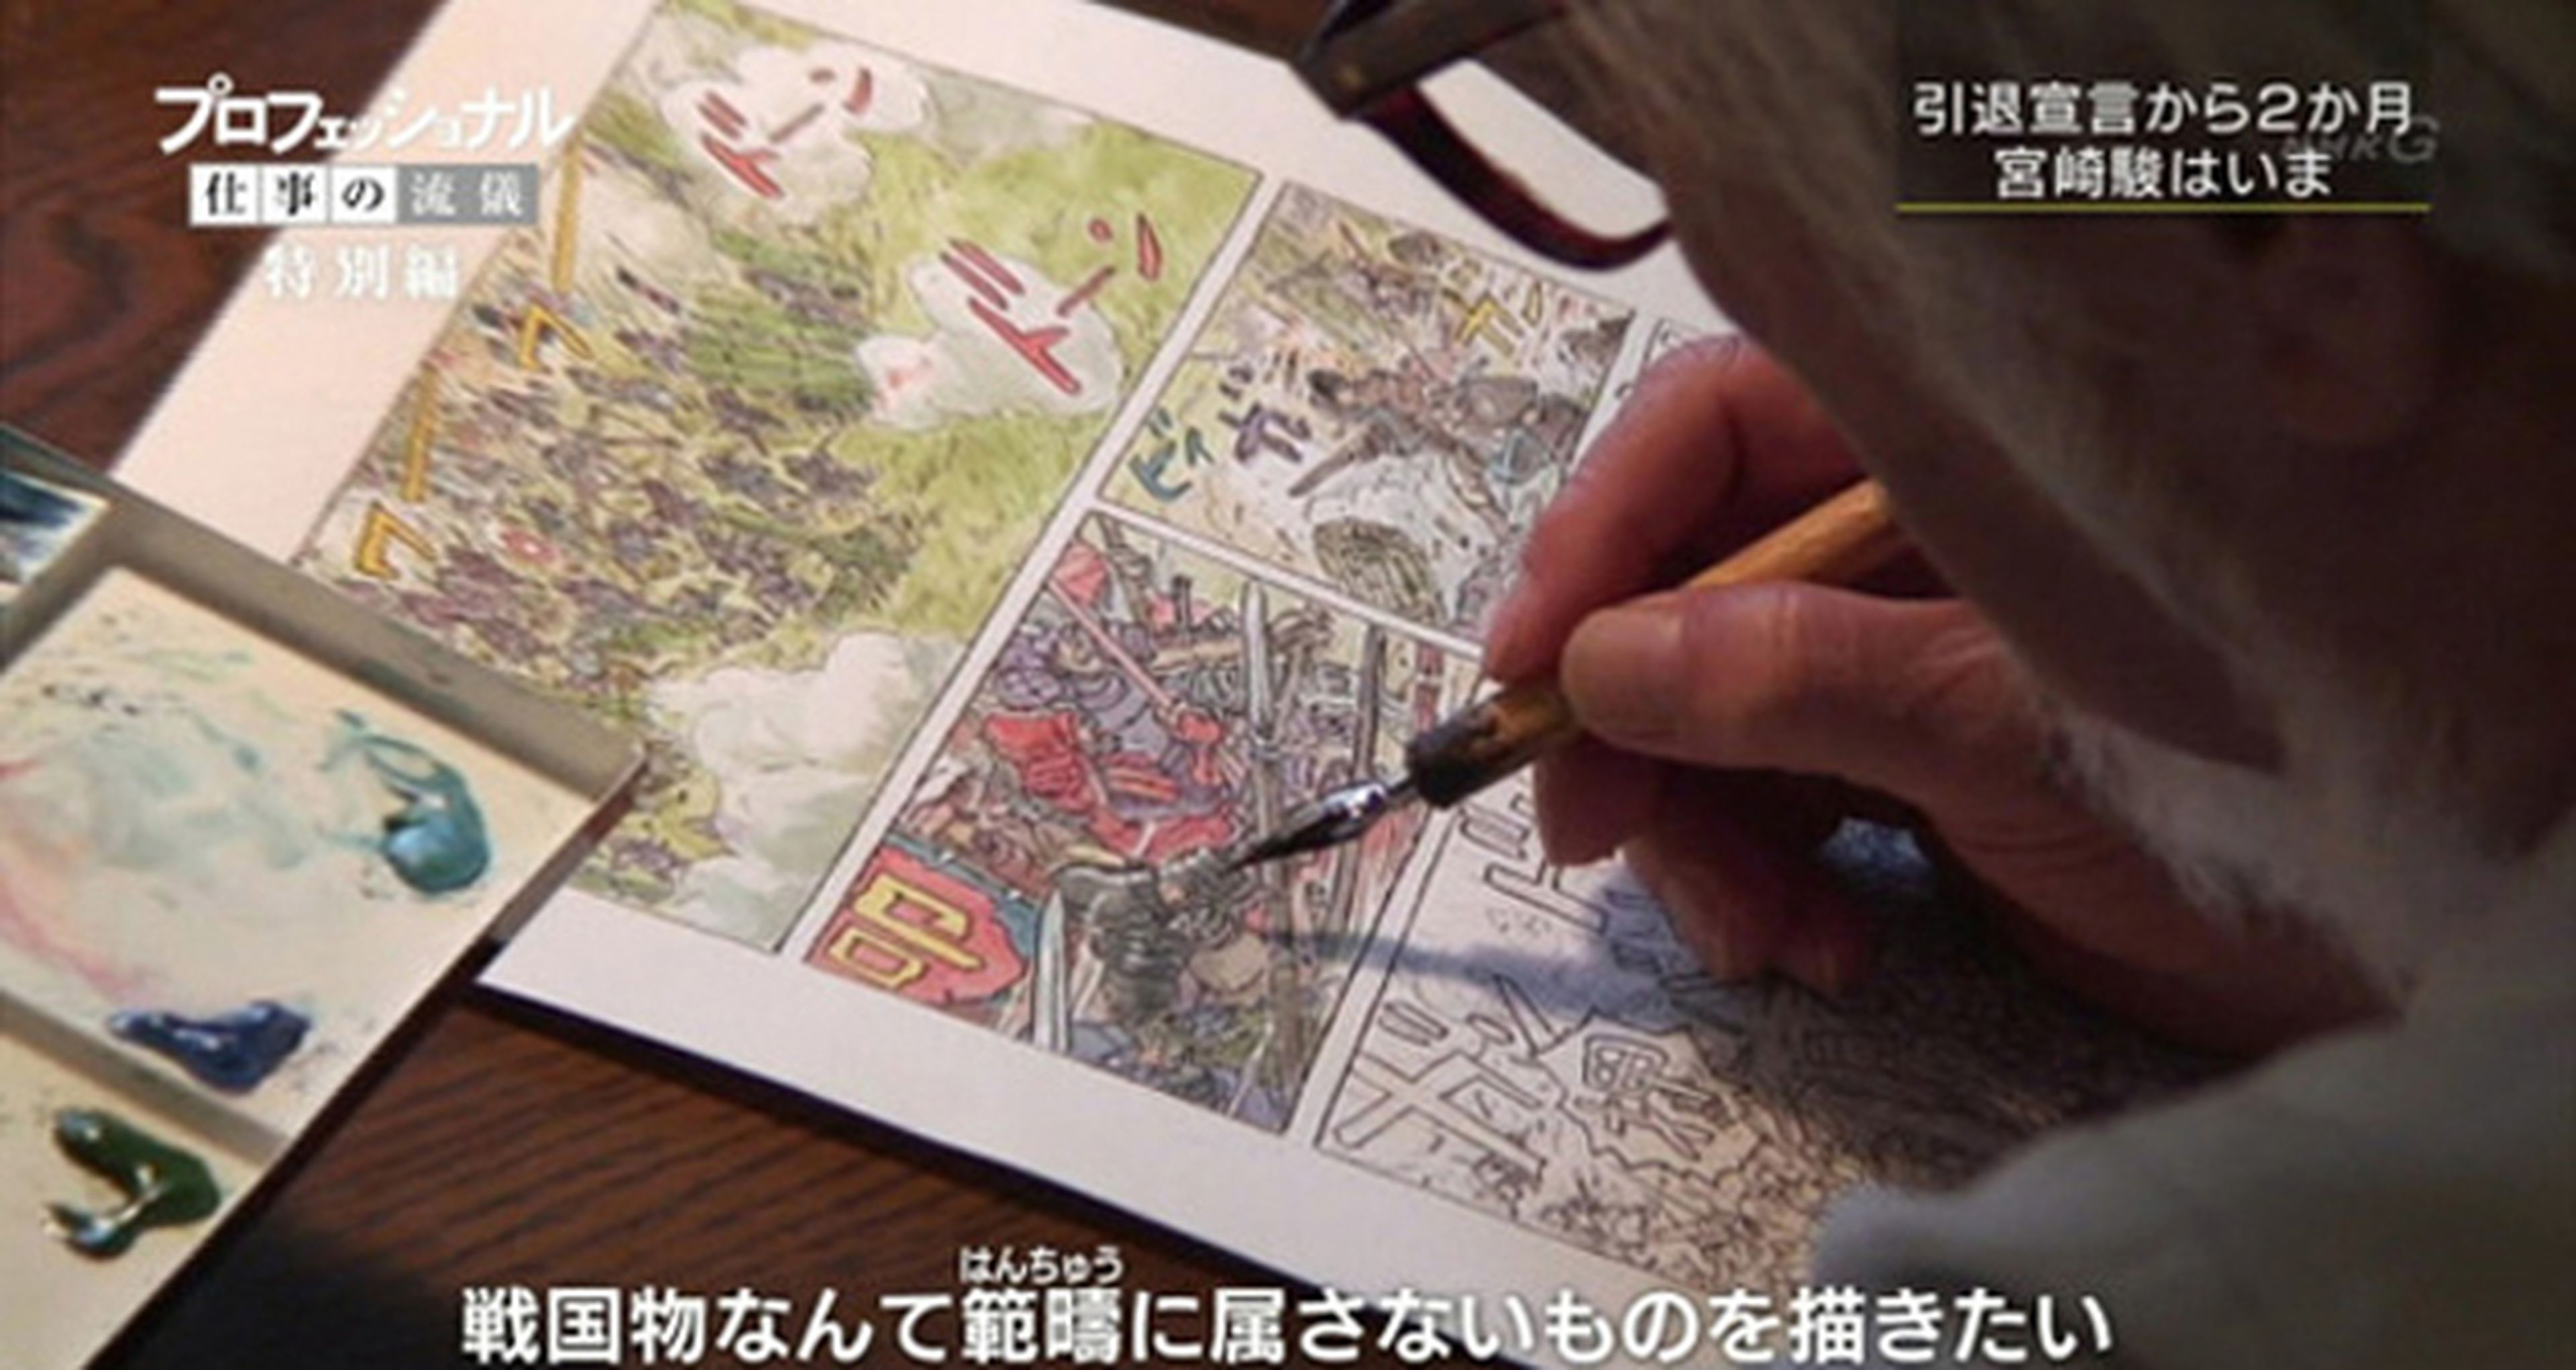 Hayao Miyazaki trabaja en un manga de samuráis